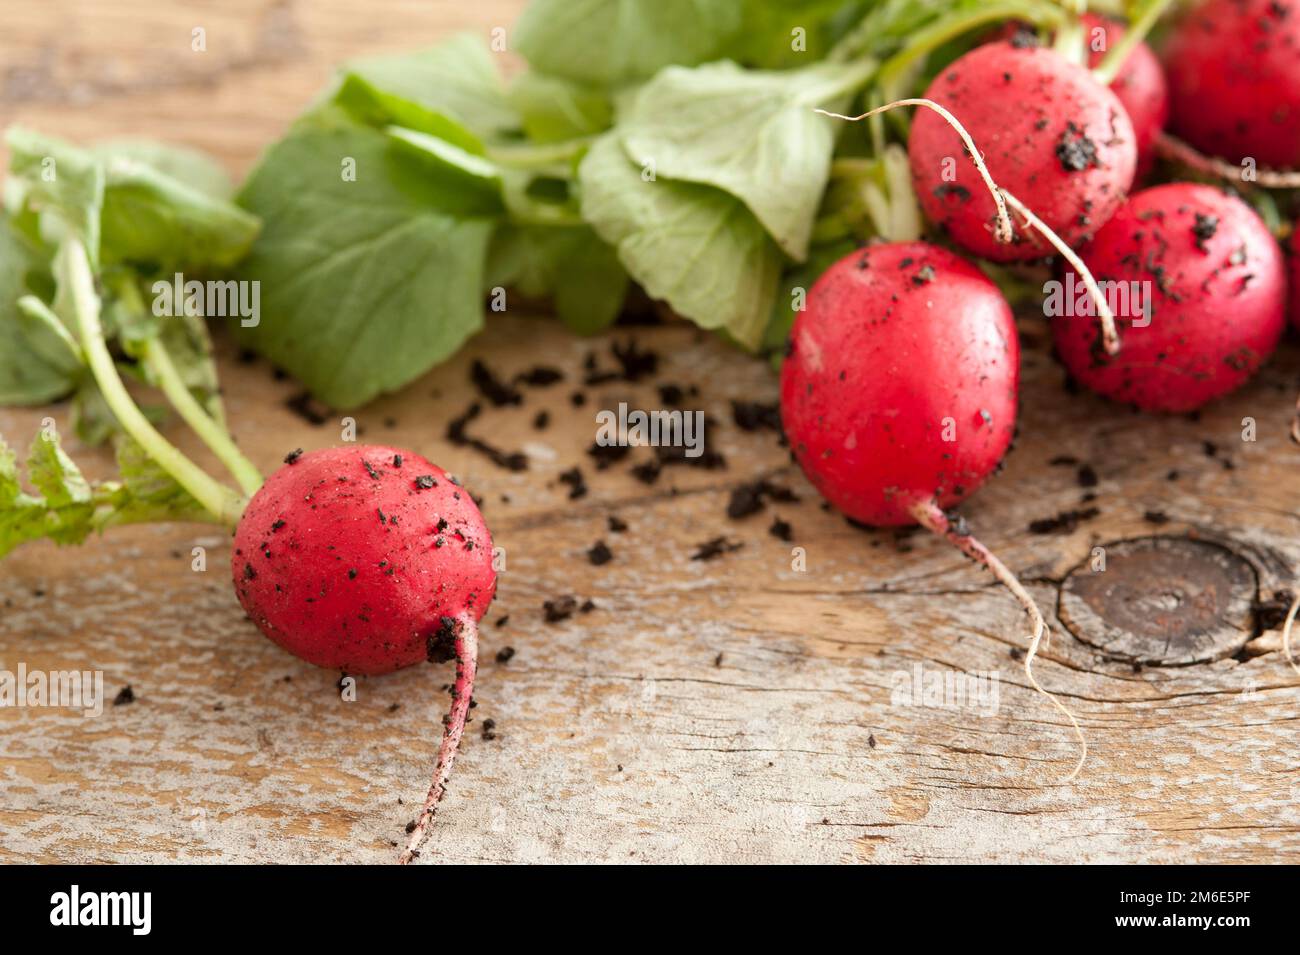 Bunch of farm fresh or homegrown radish Stock Photo